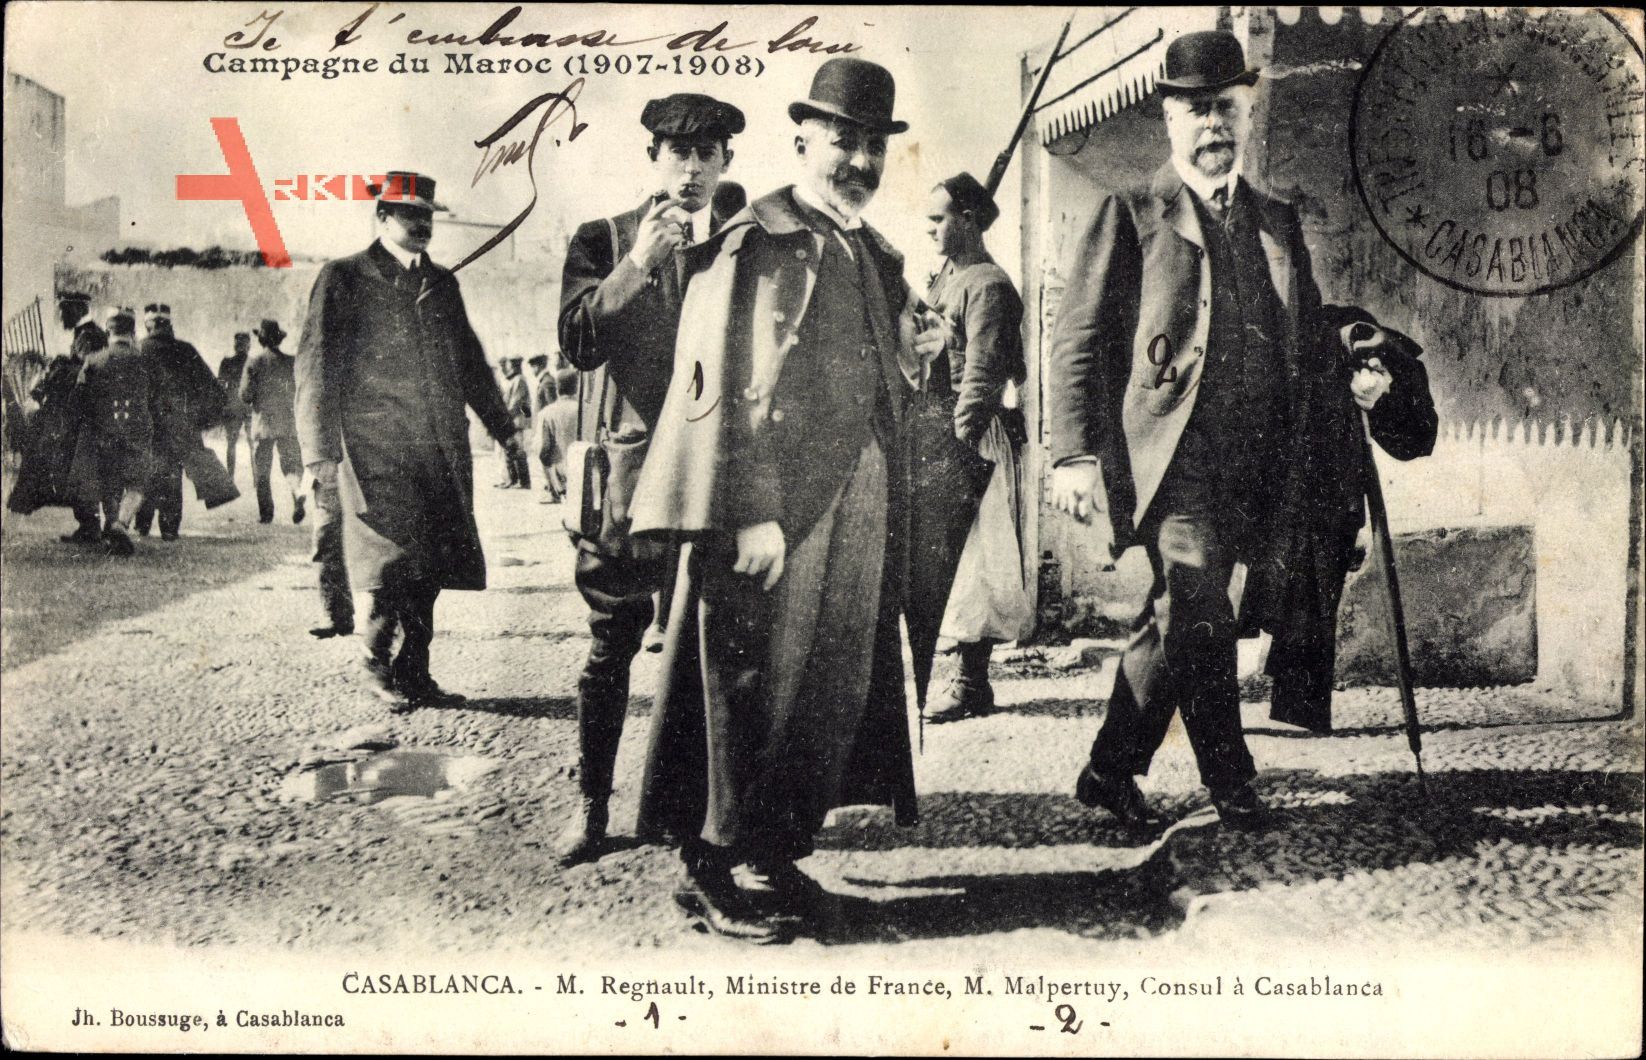 Casablanca Marokko, M. Regnault, M. Malpertuy, Consul, Campagne du Maroc